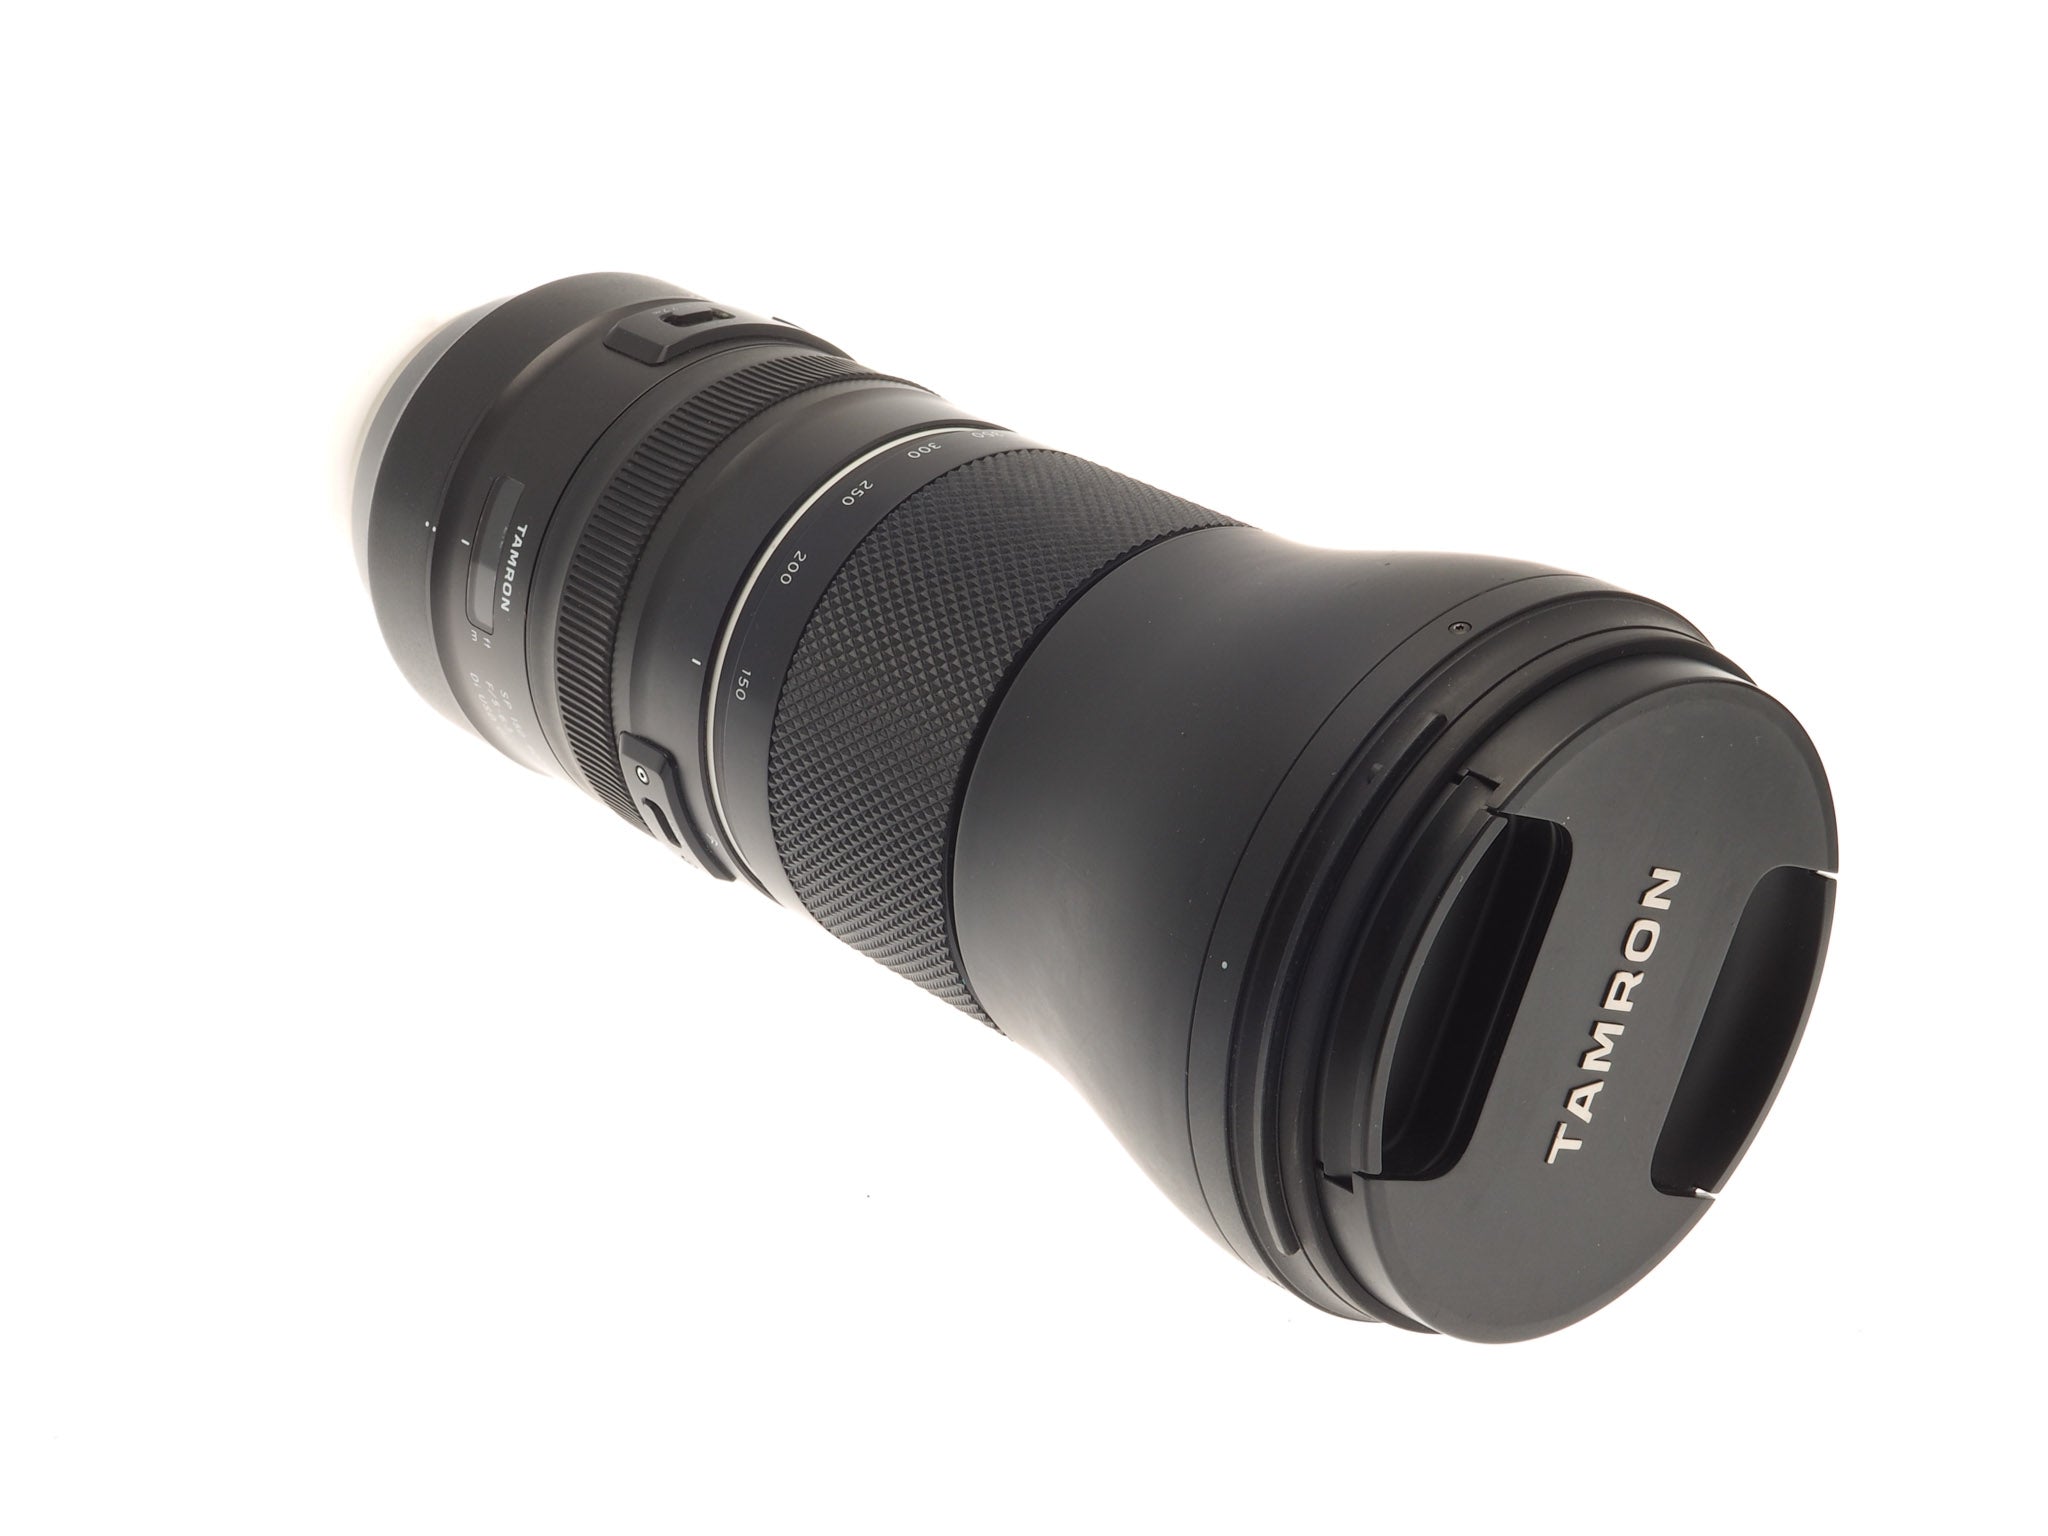 Tamron 150-600mm f5-6.3 Di VC USD G2 (A022) - Lens